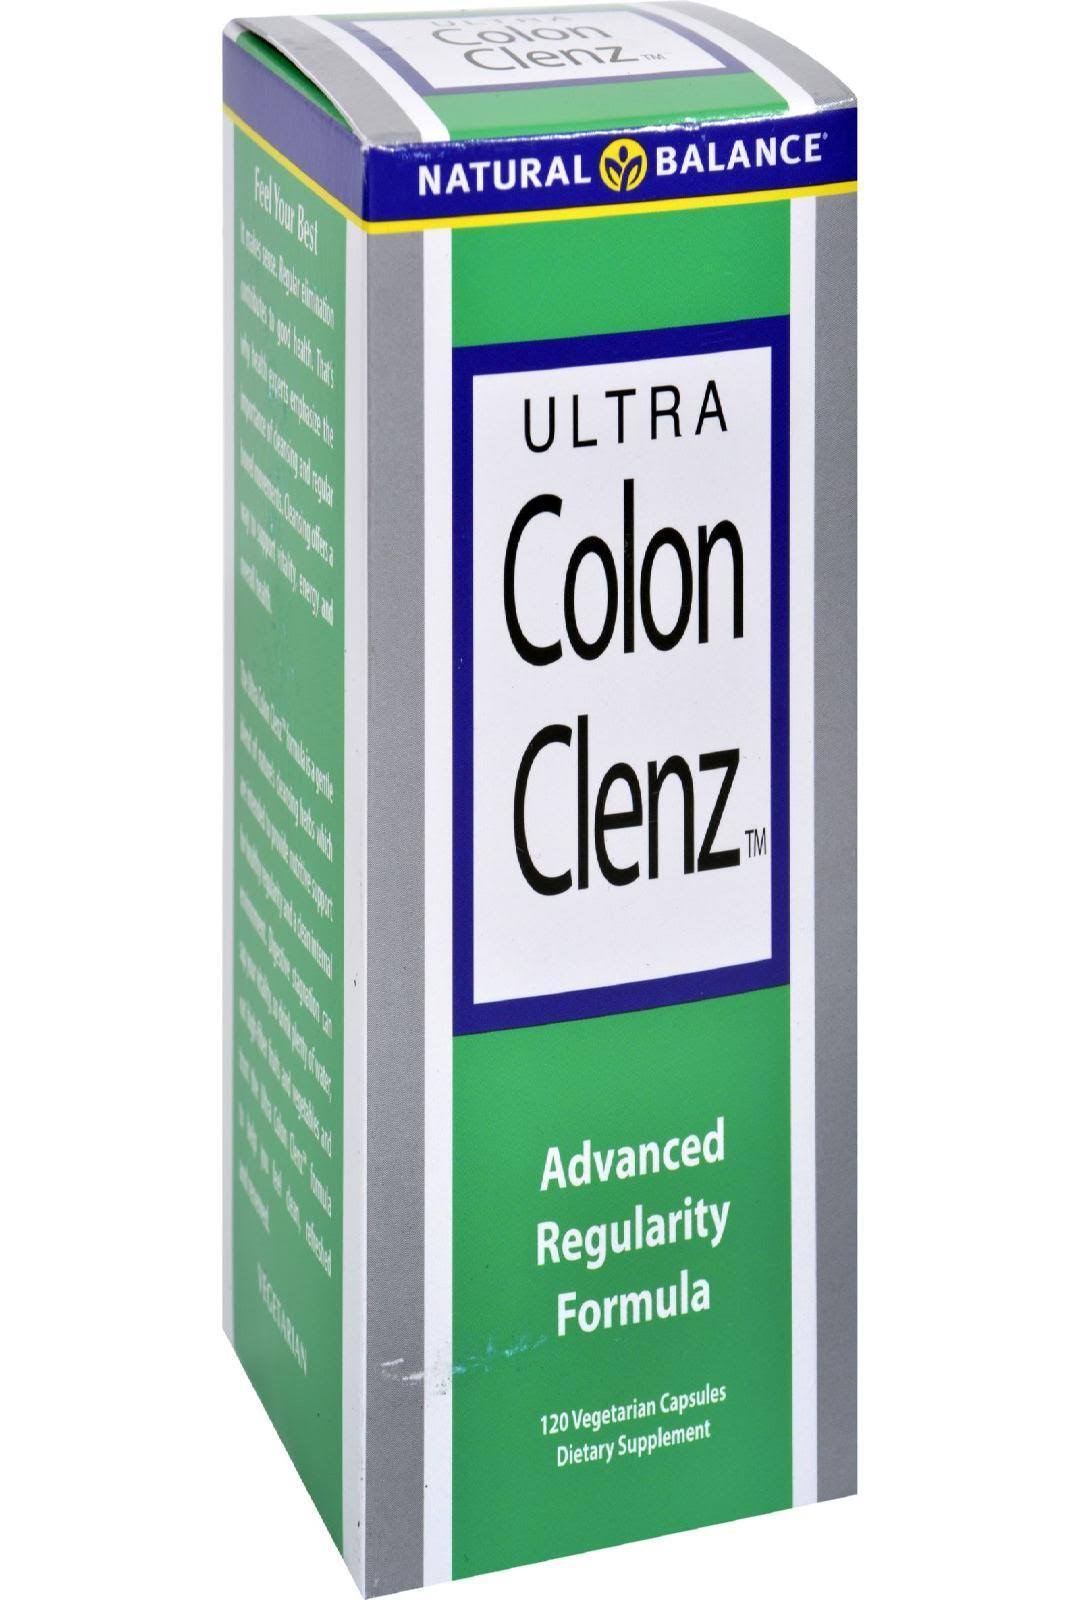 Natural Balance Ultra Colon Clenz - 120 Capsules